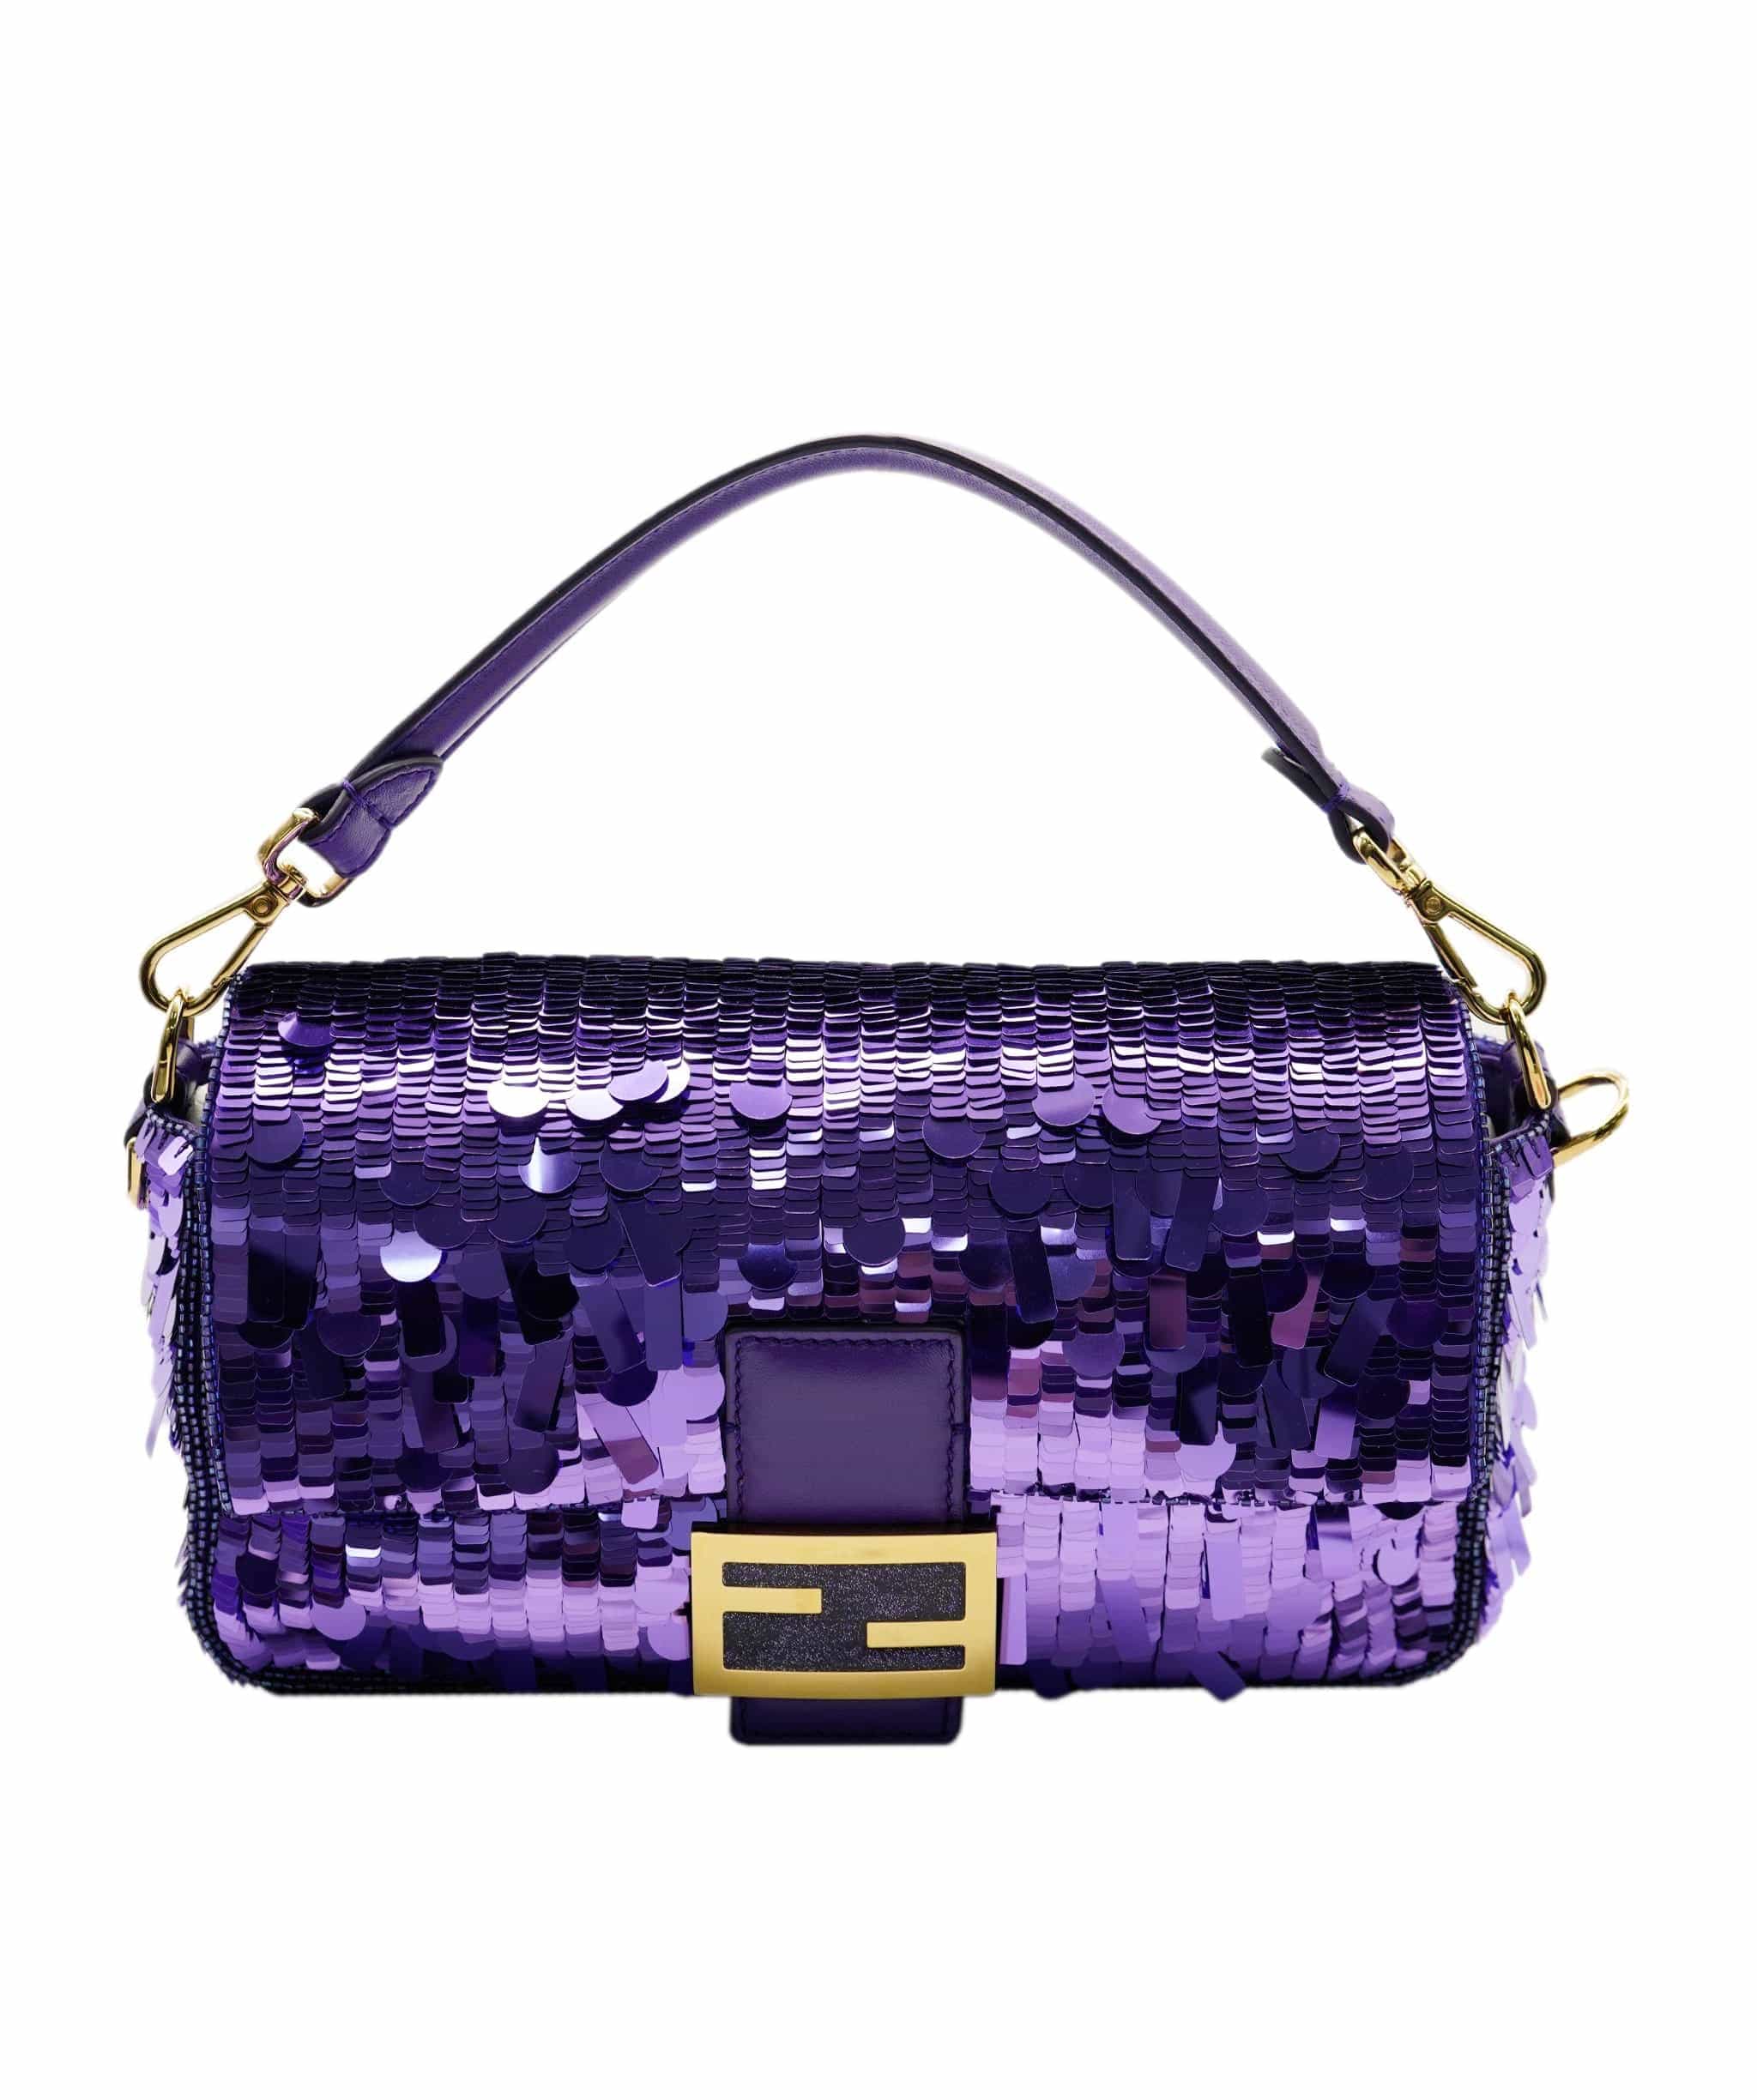 Baguette - Purple sequined bag